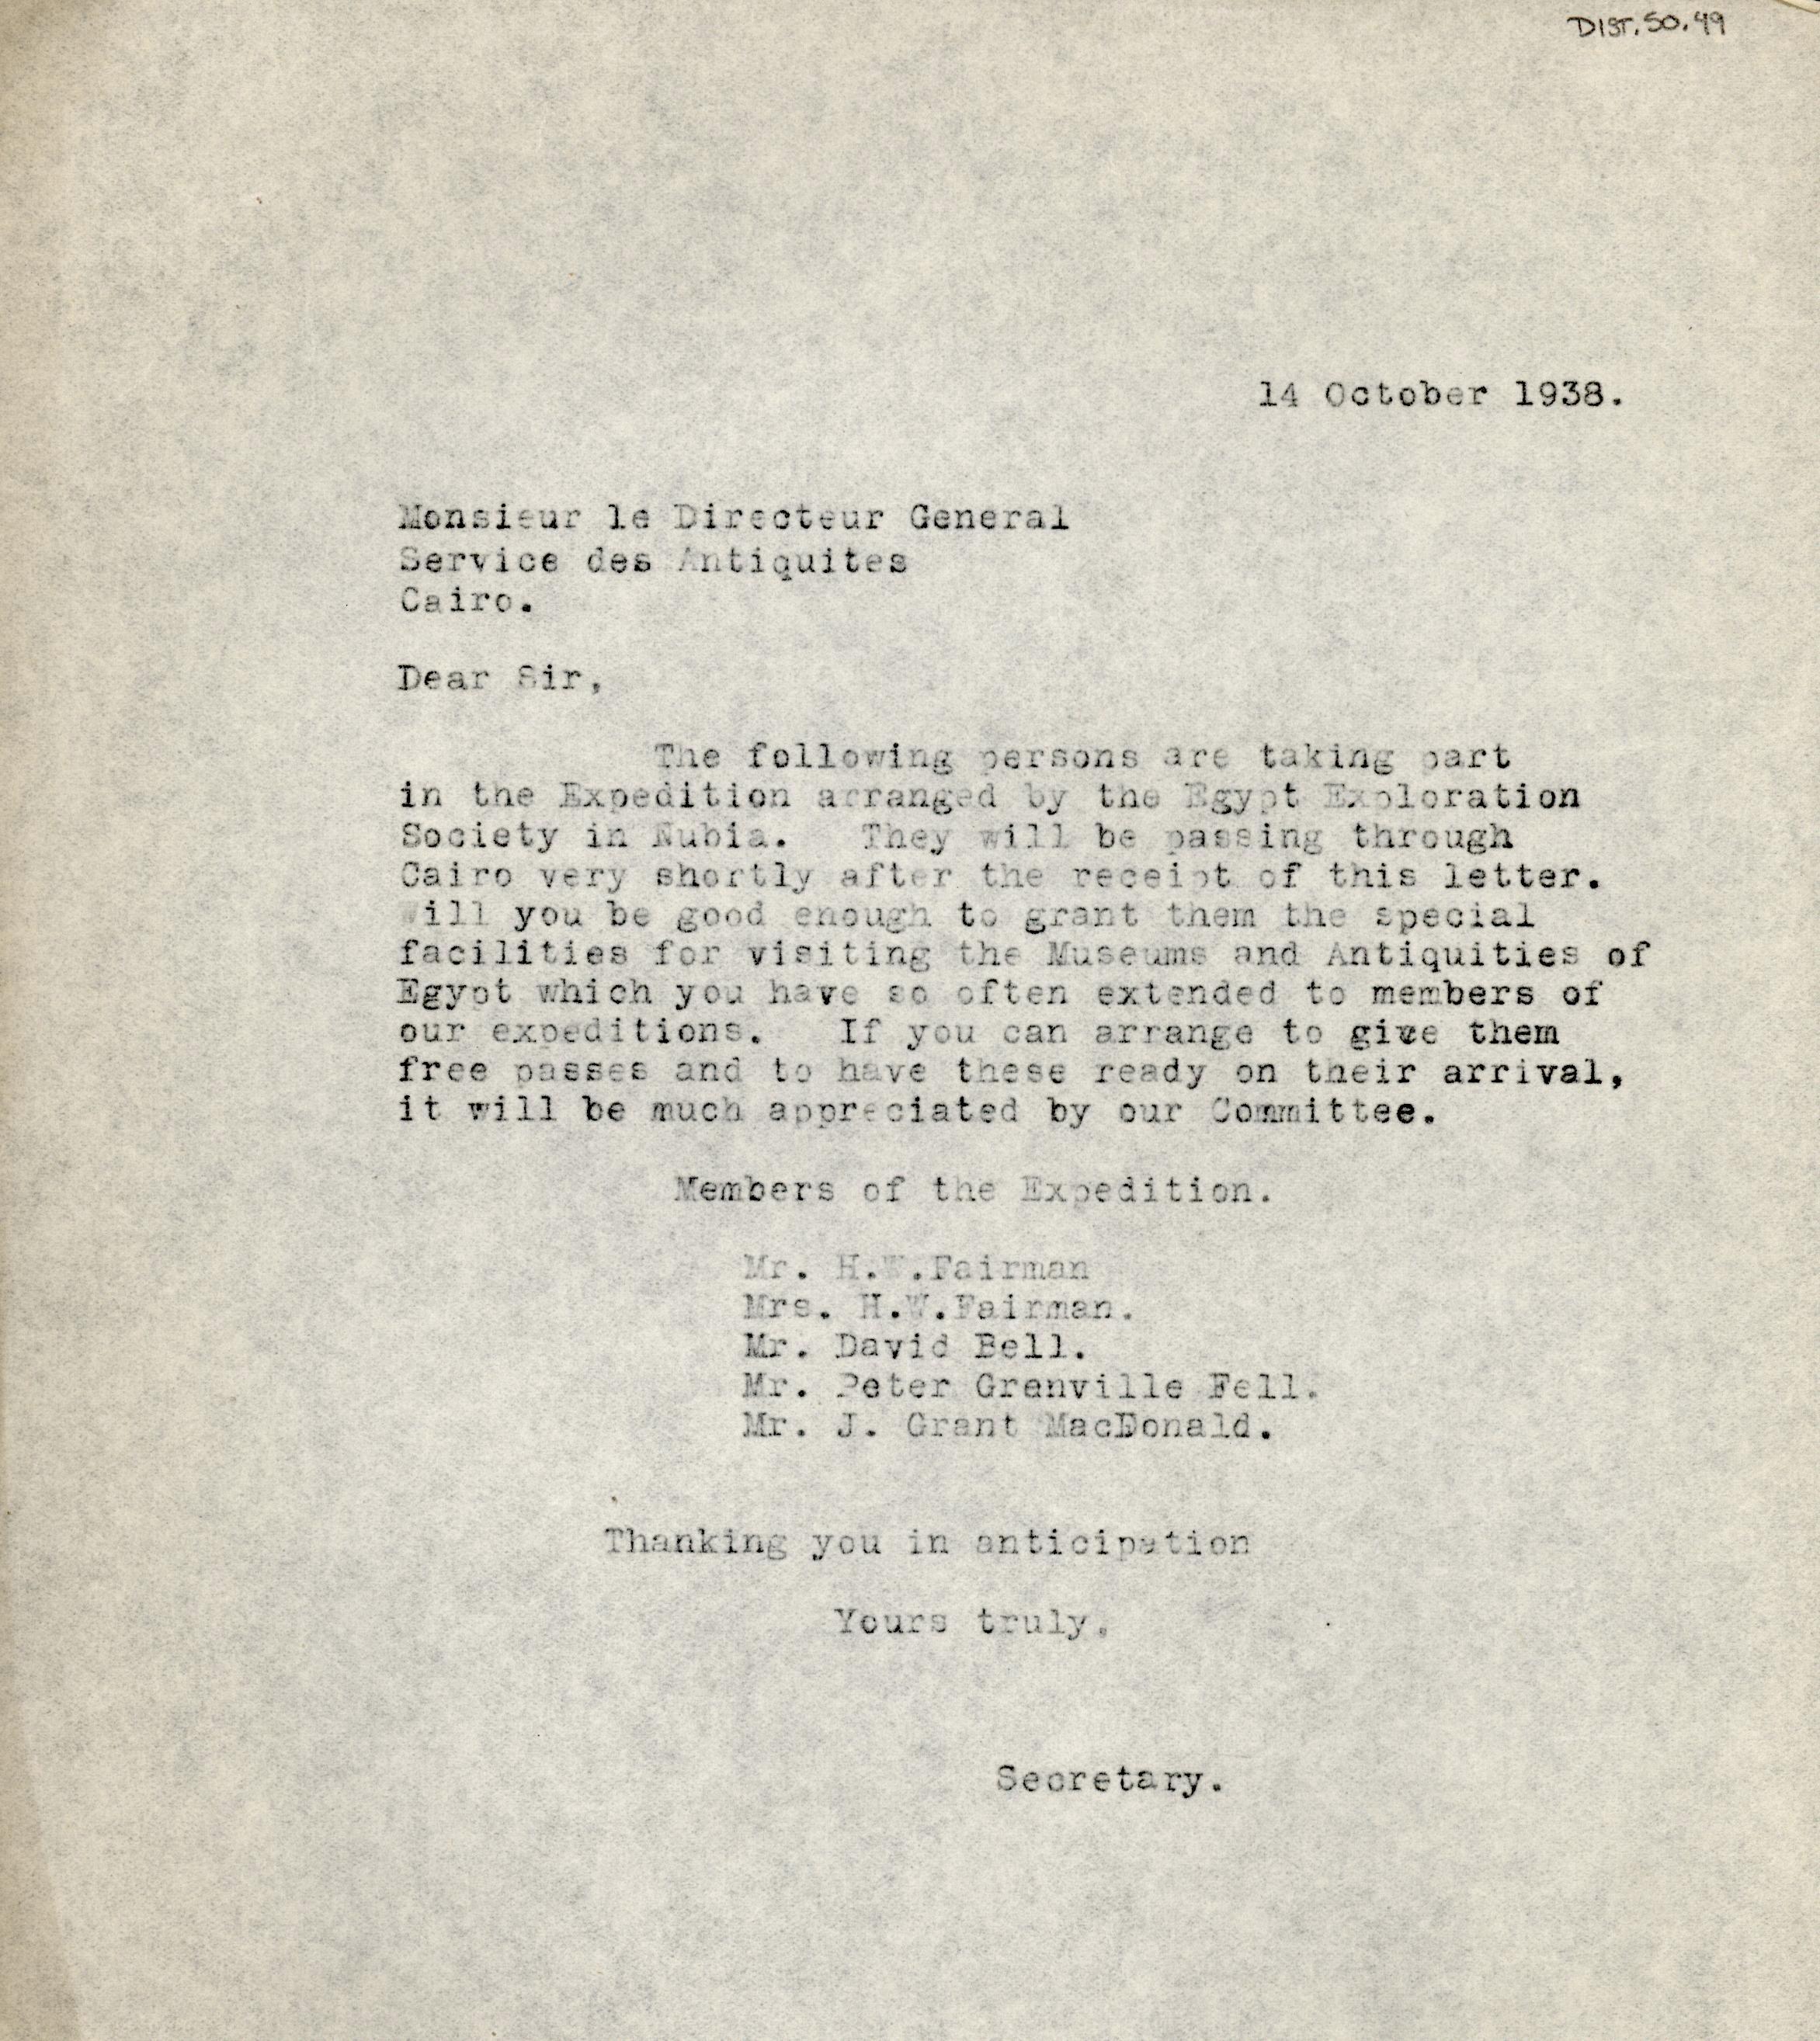 1926-39 correspondence with Antiquities Service DIST.50.49